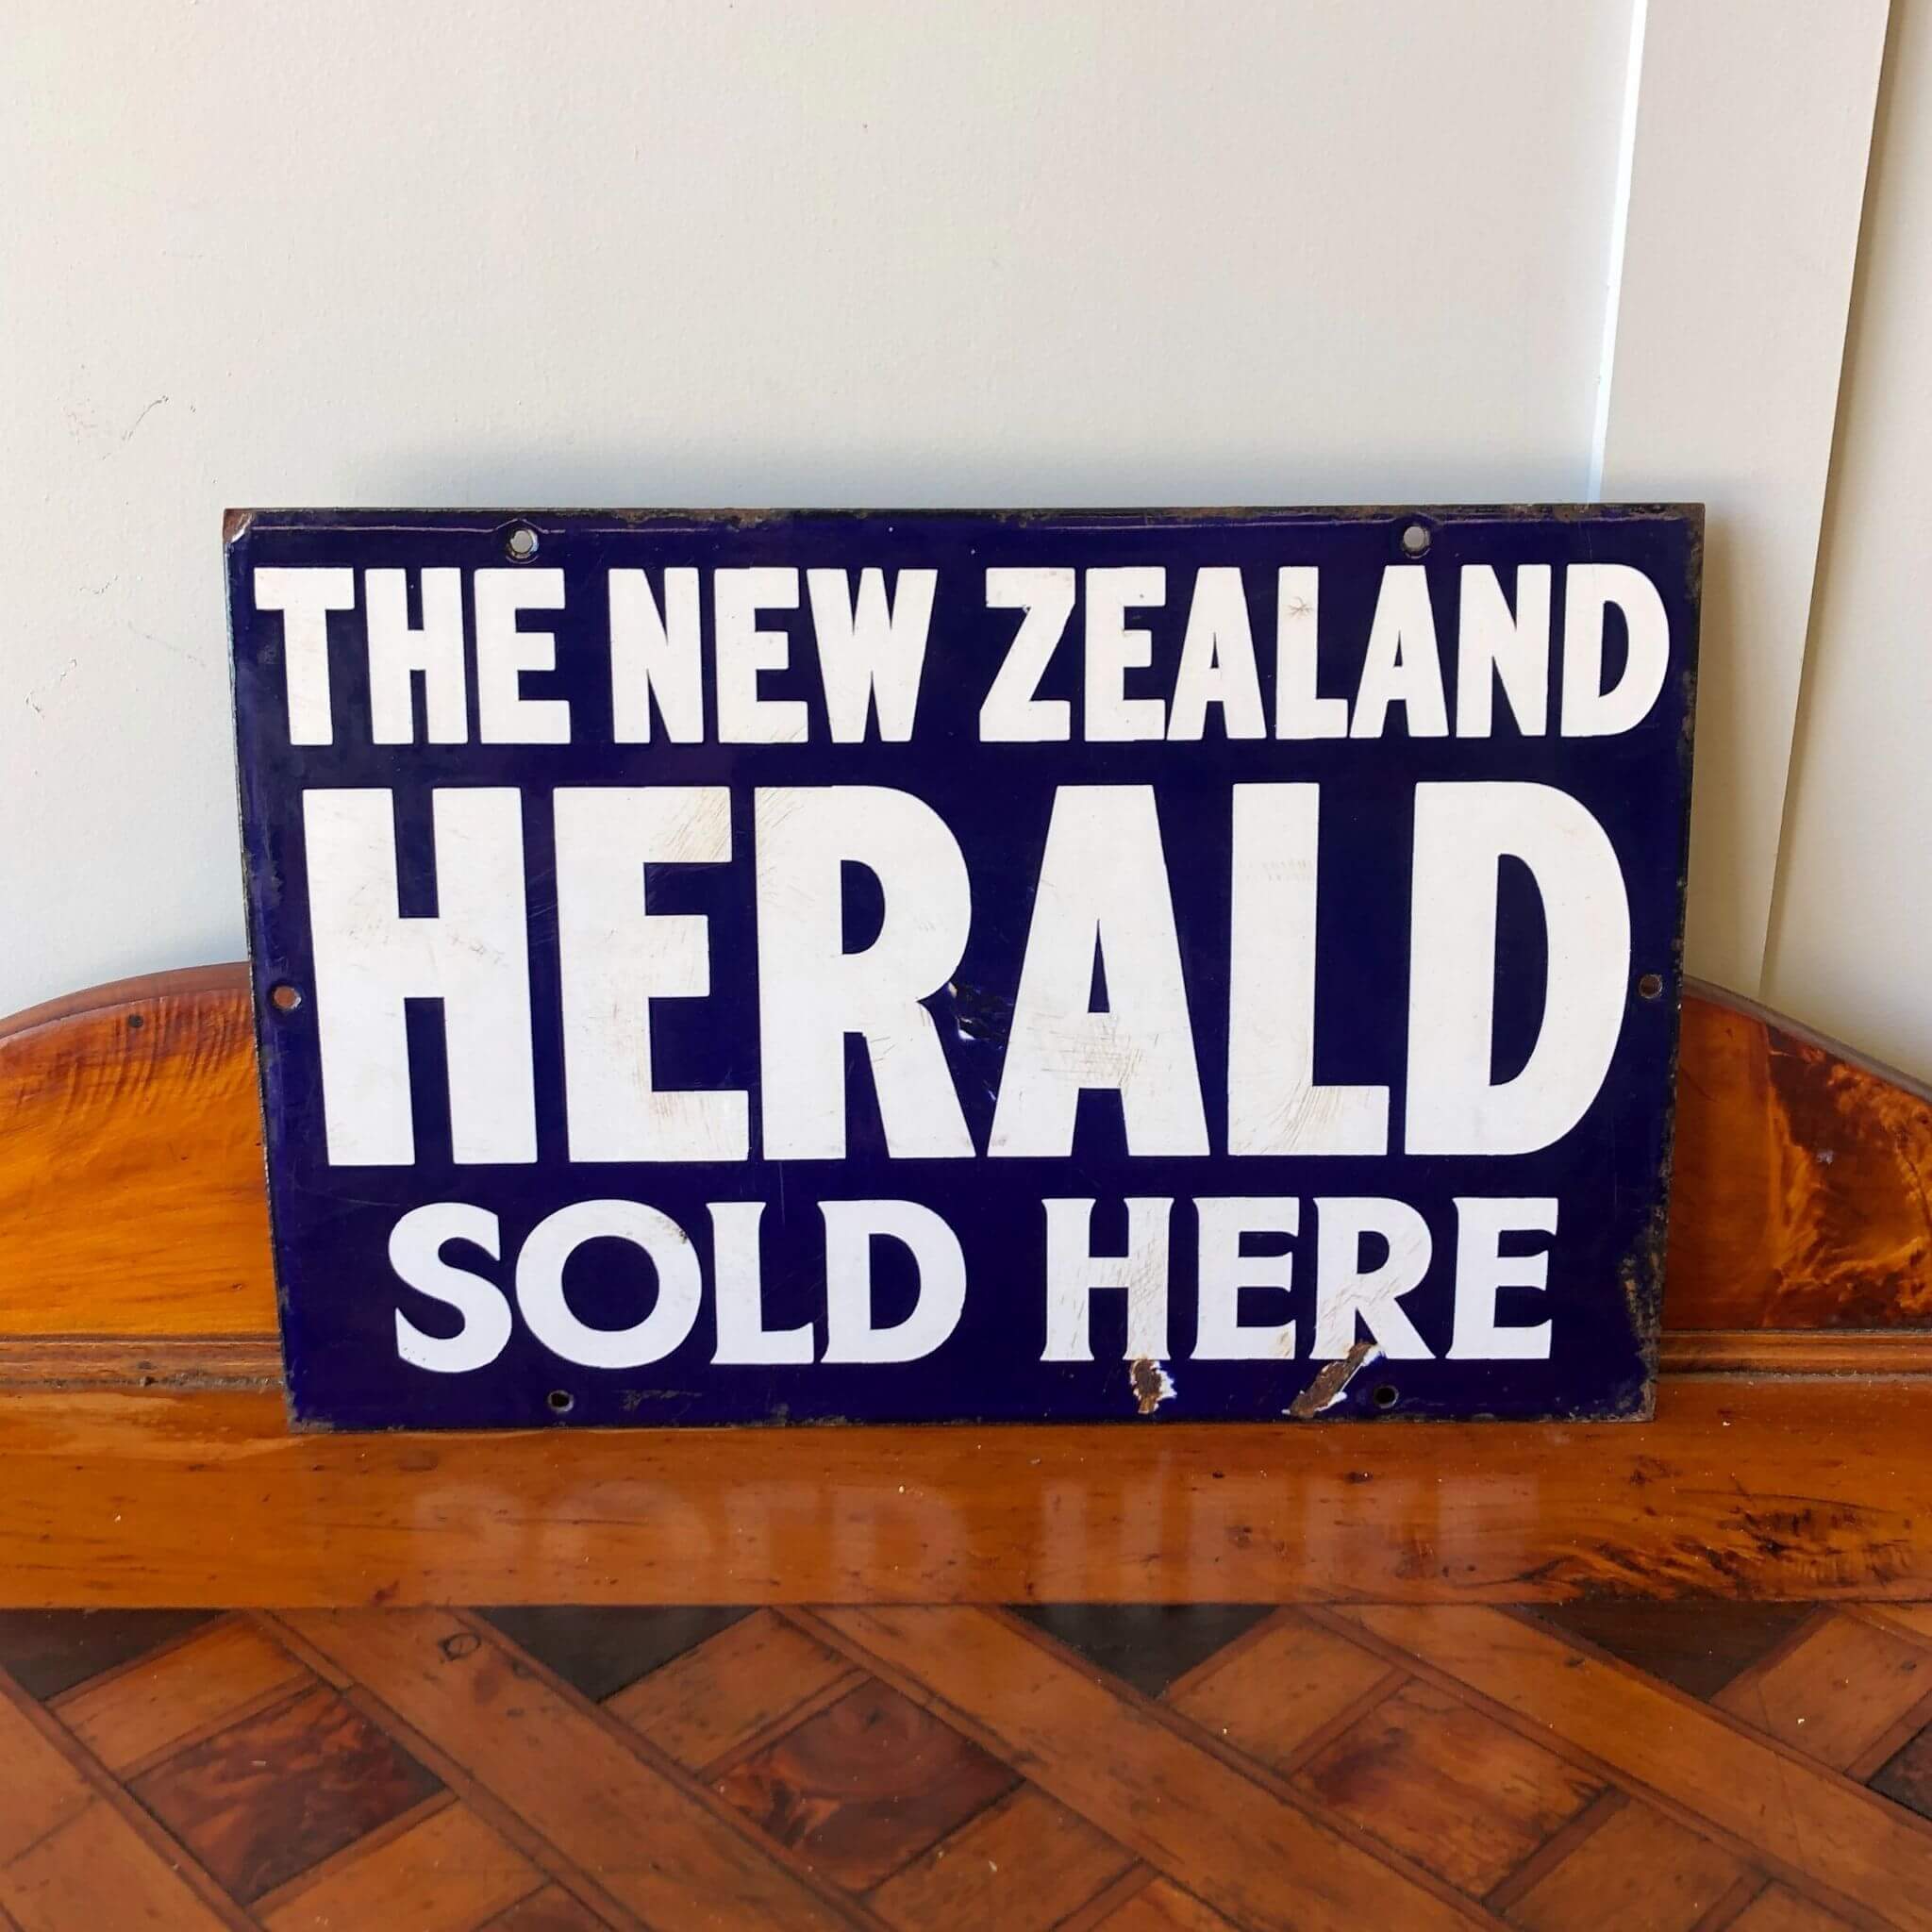 Vintage advertising sign, enamel sign The New Zealand Herald